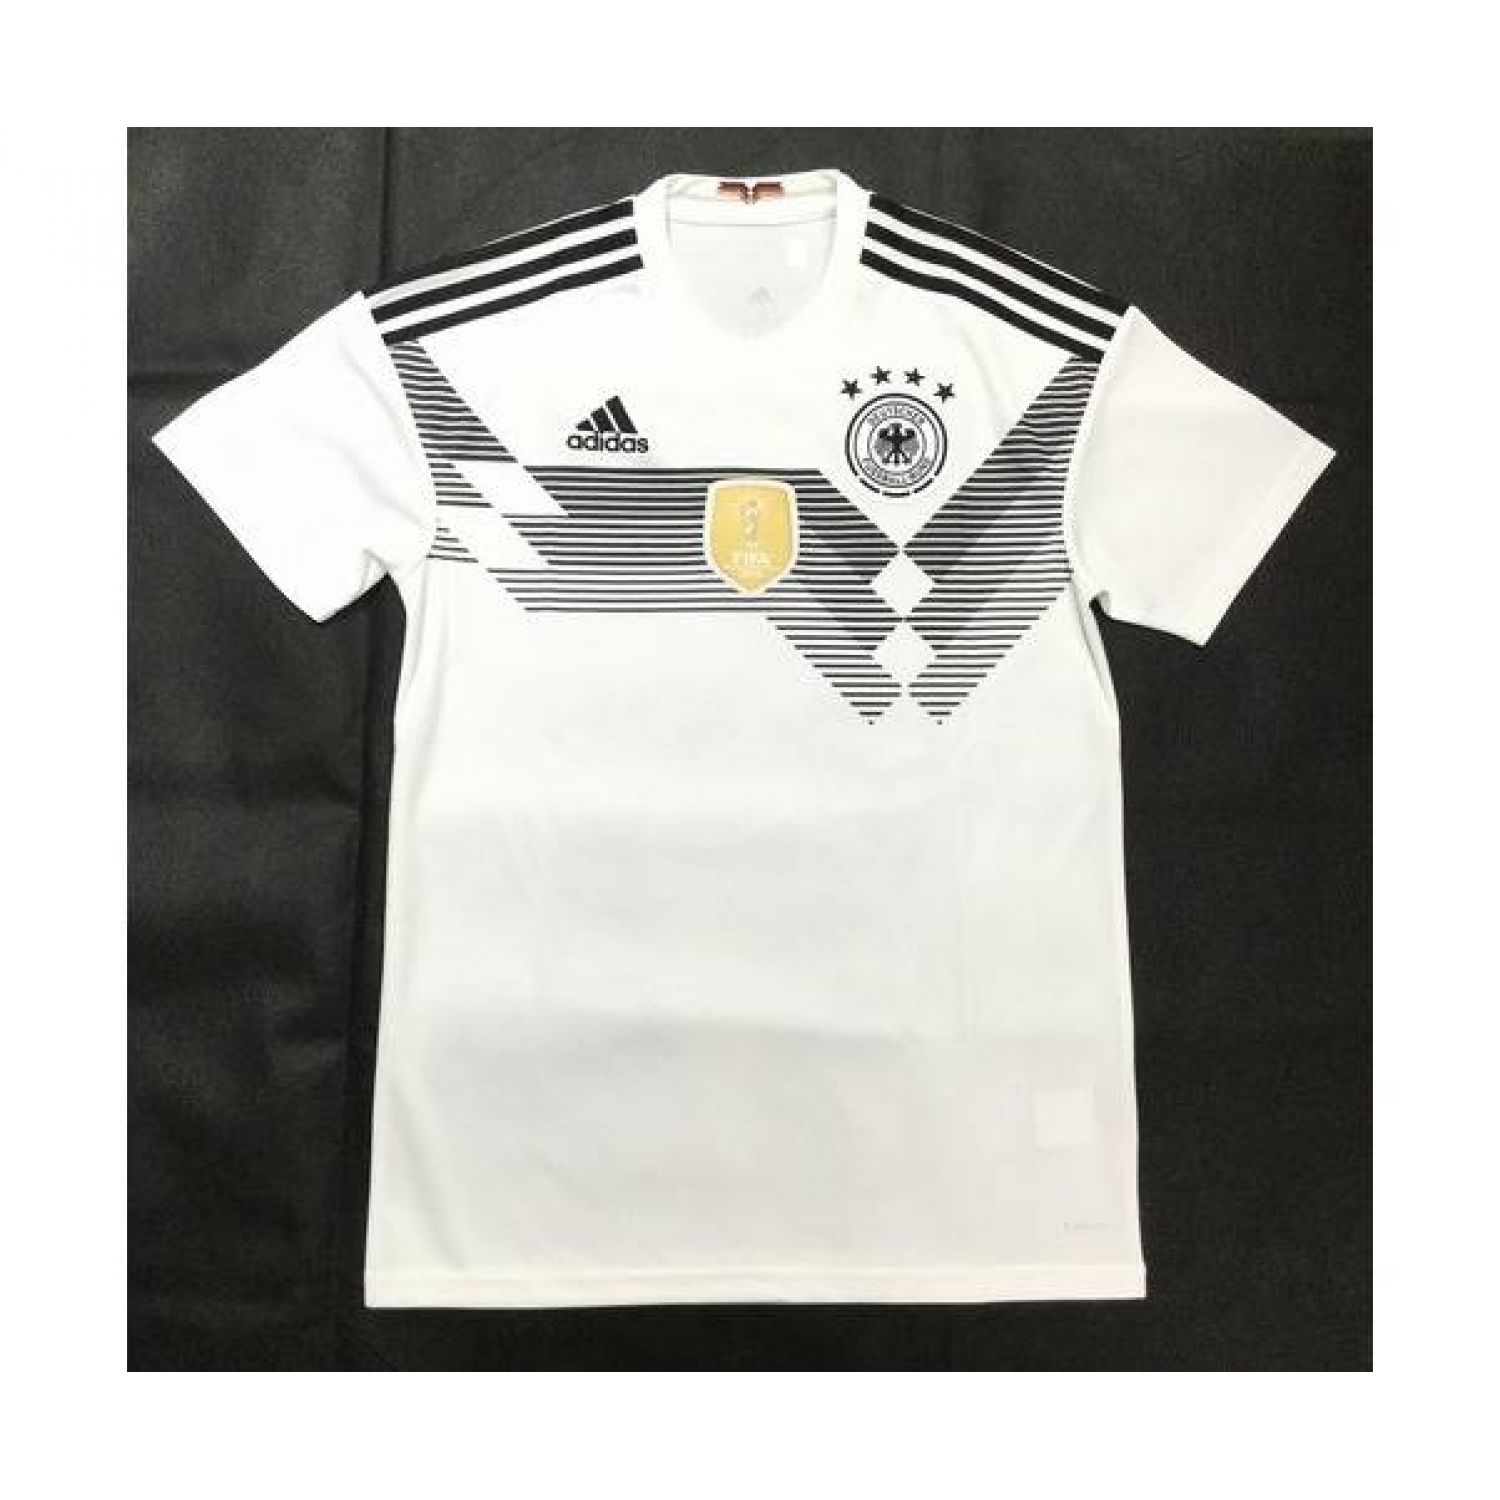 Adidas サッカーユニフォーム ホワイト ドイツ代表18 Br7843 トレファクonline